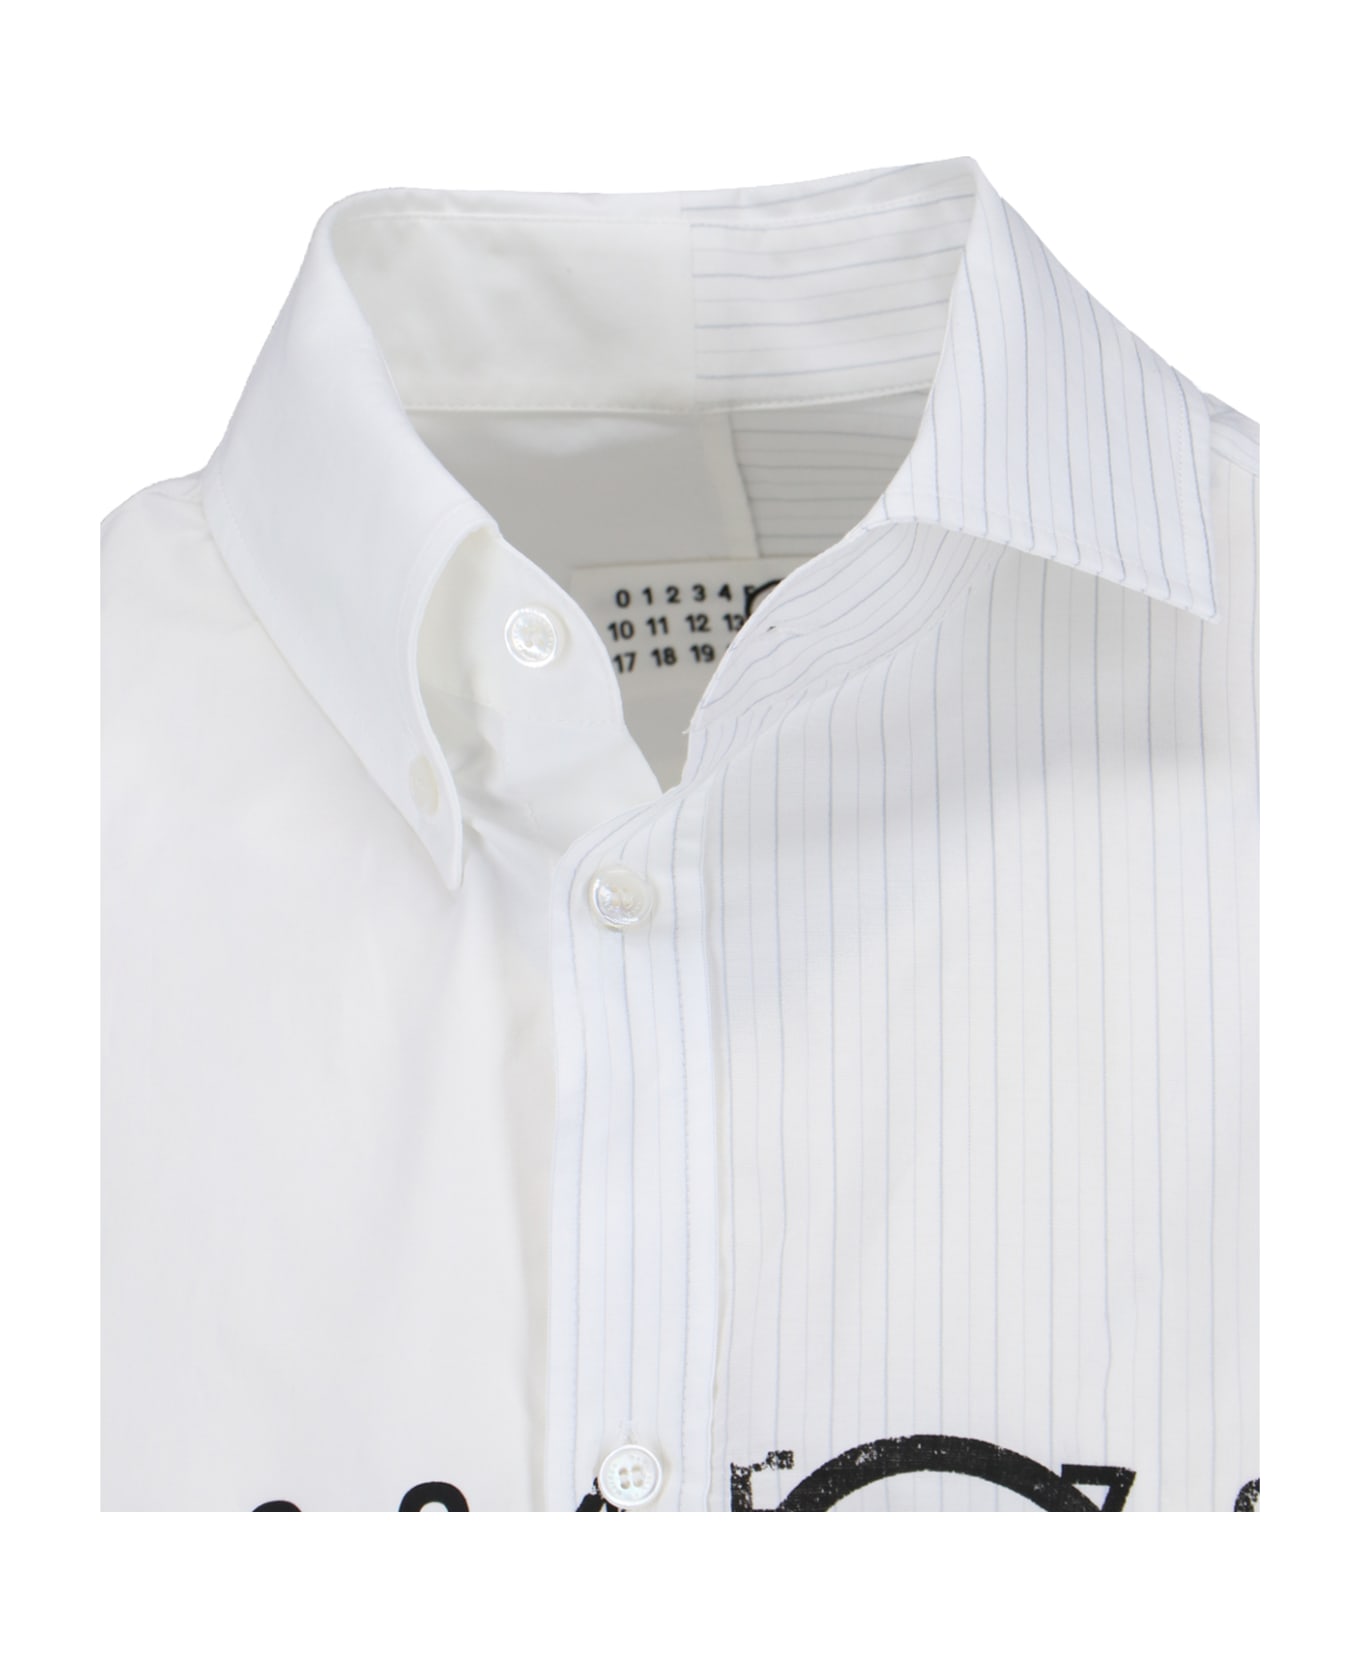 MM6 Maison Margiela Patchwork Shirt - White シャツ